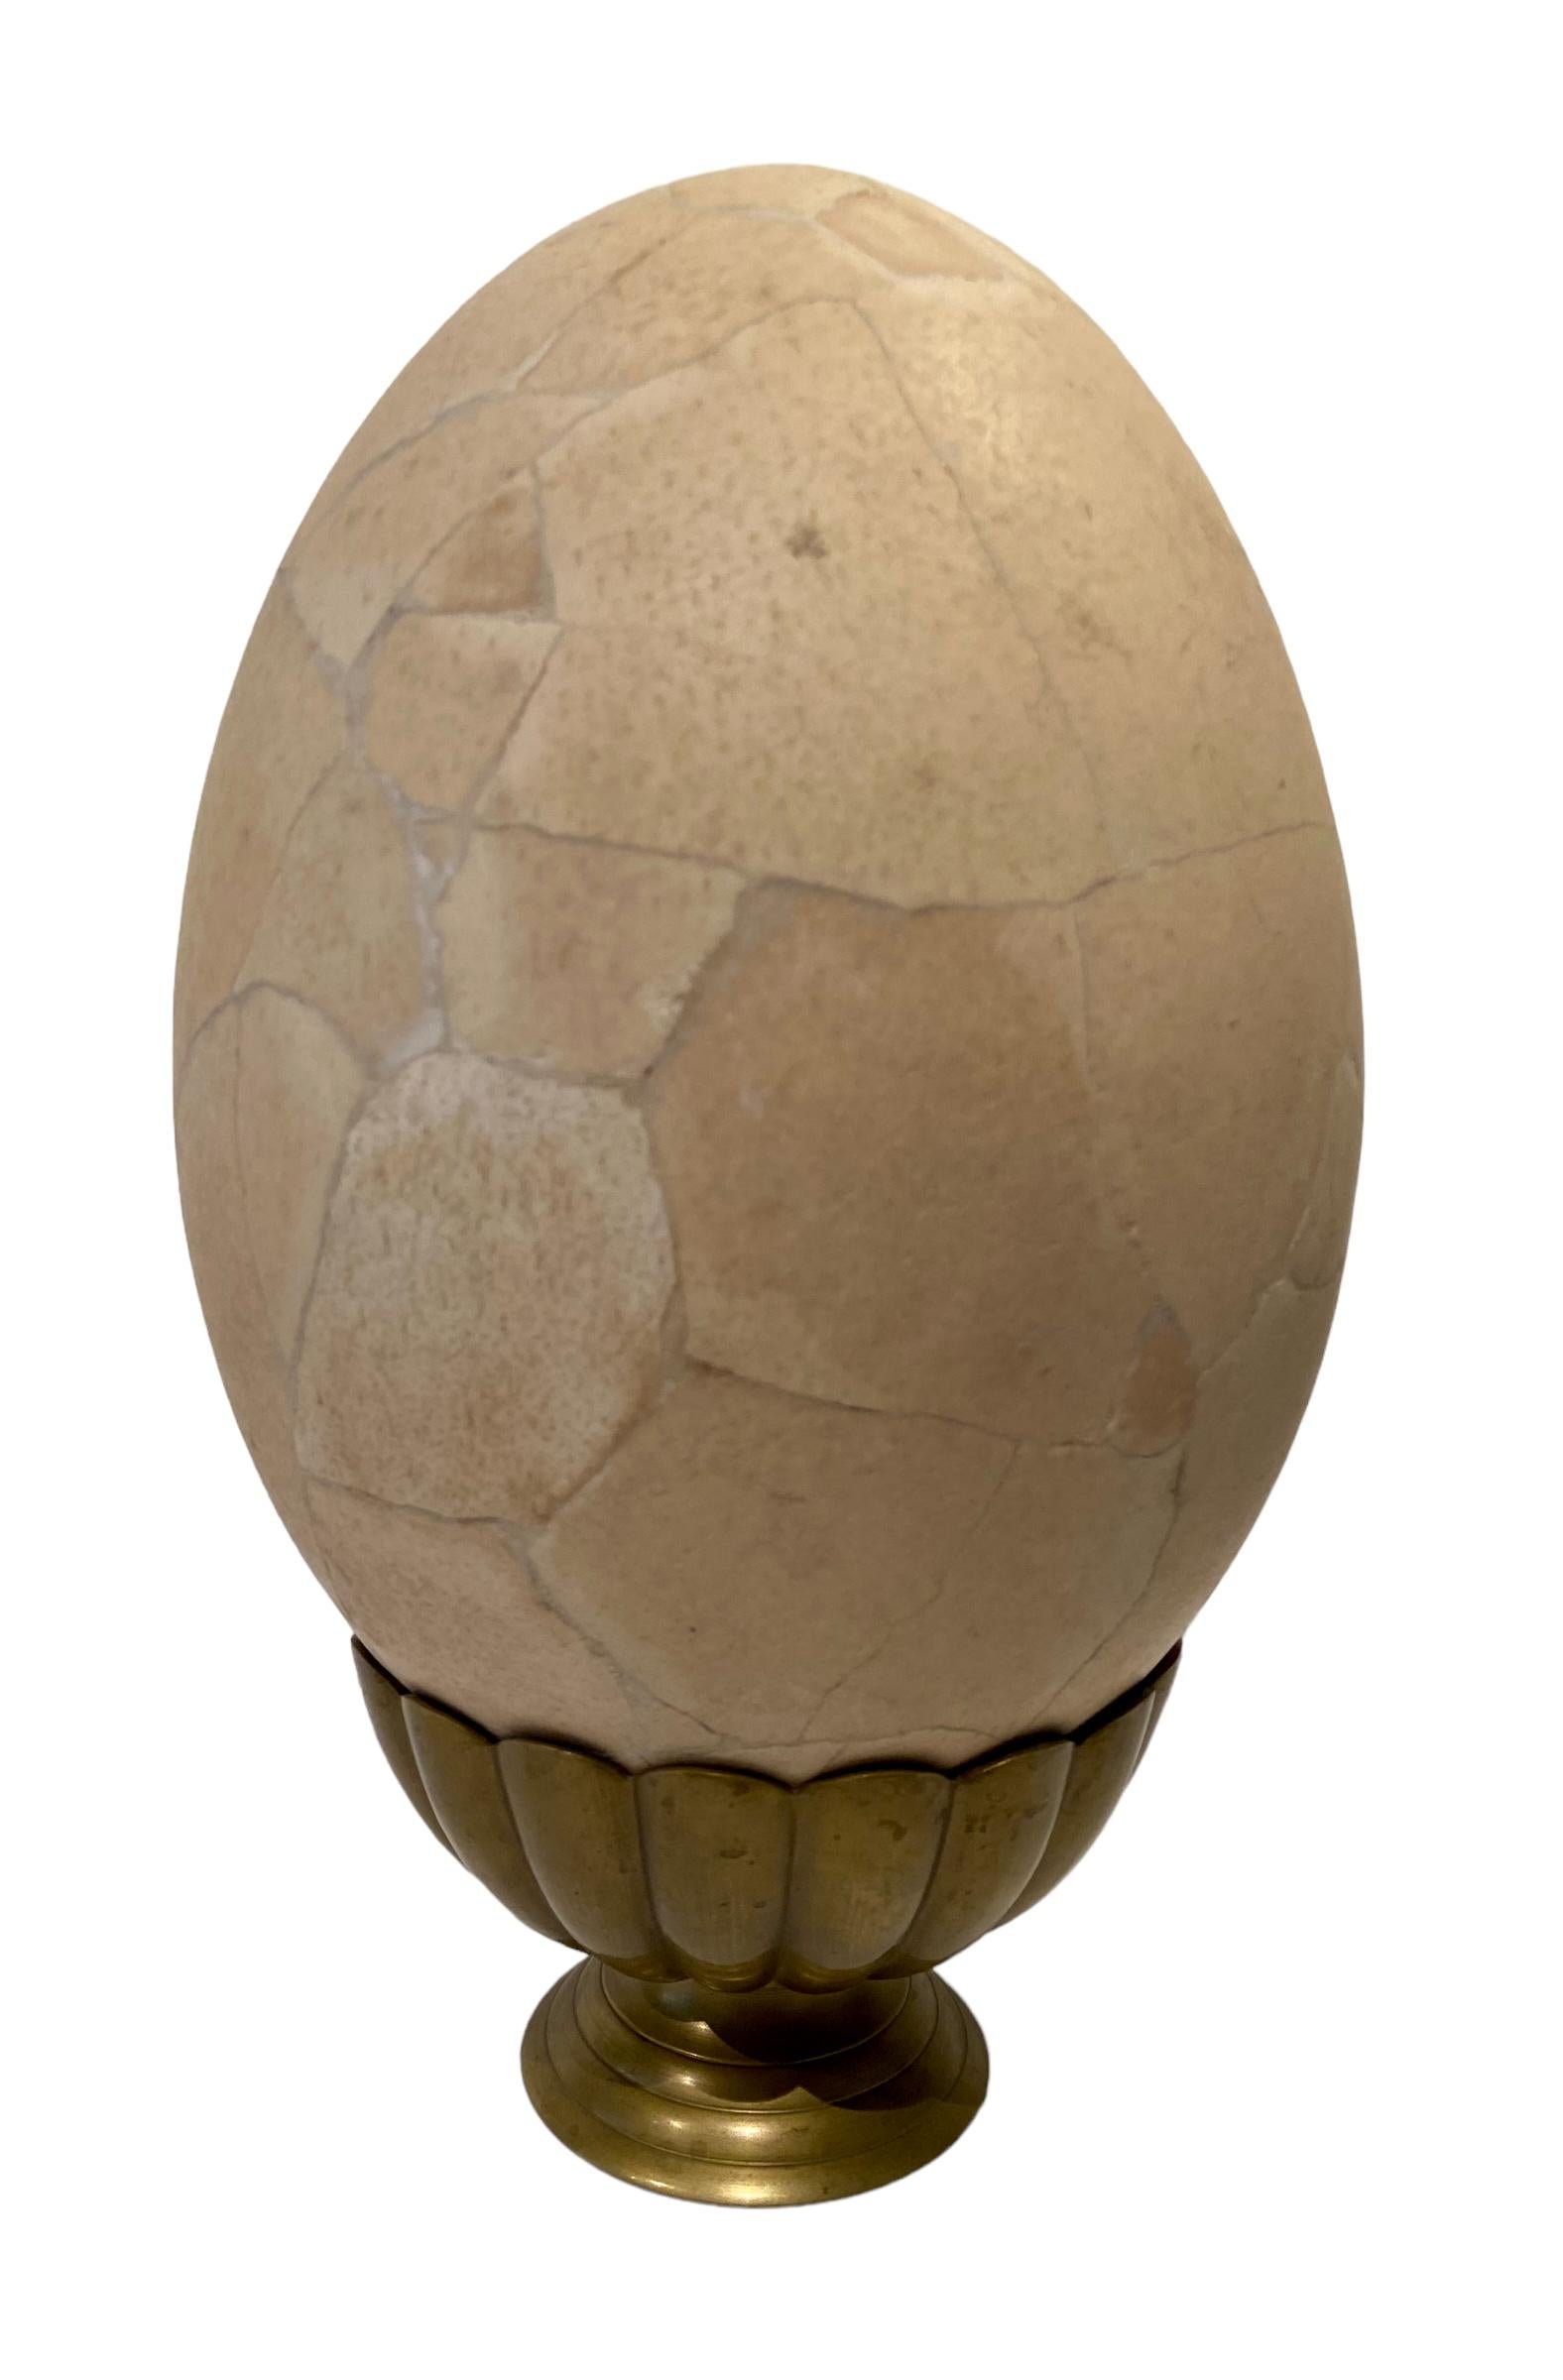 Hand-Crafted Elephant bird egg